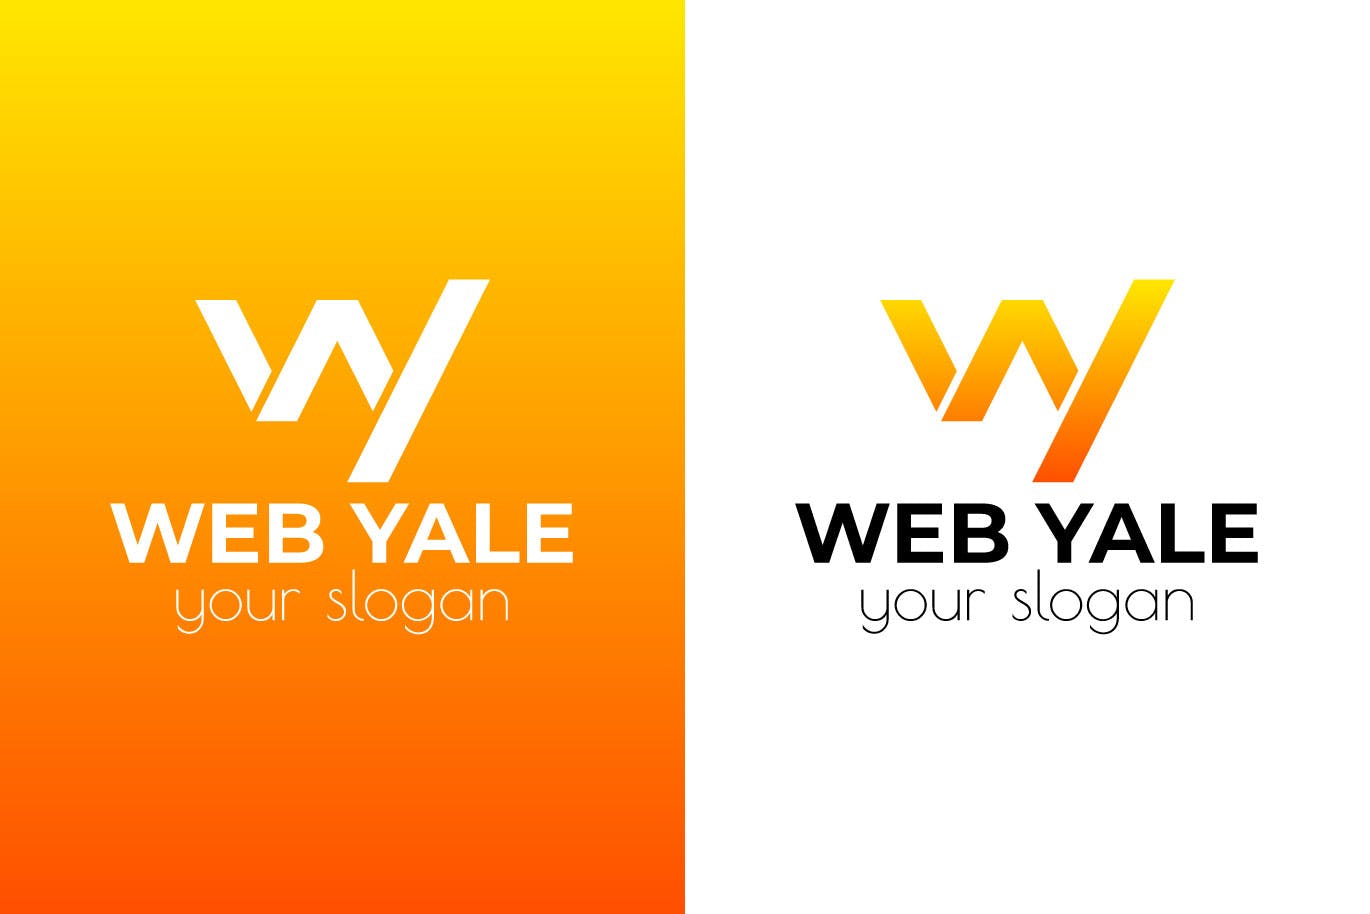 W&Y字母组合几何图形现代Logo设计素材中国精选模板 Web Yale Modern Logo Template插图(1)